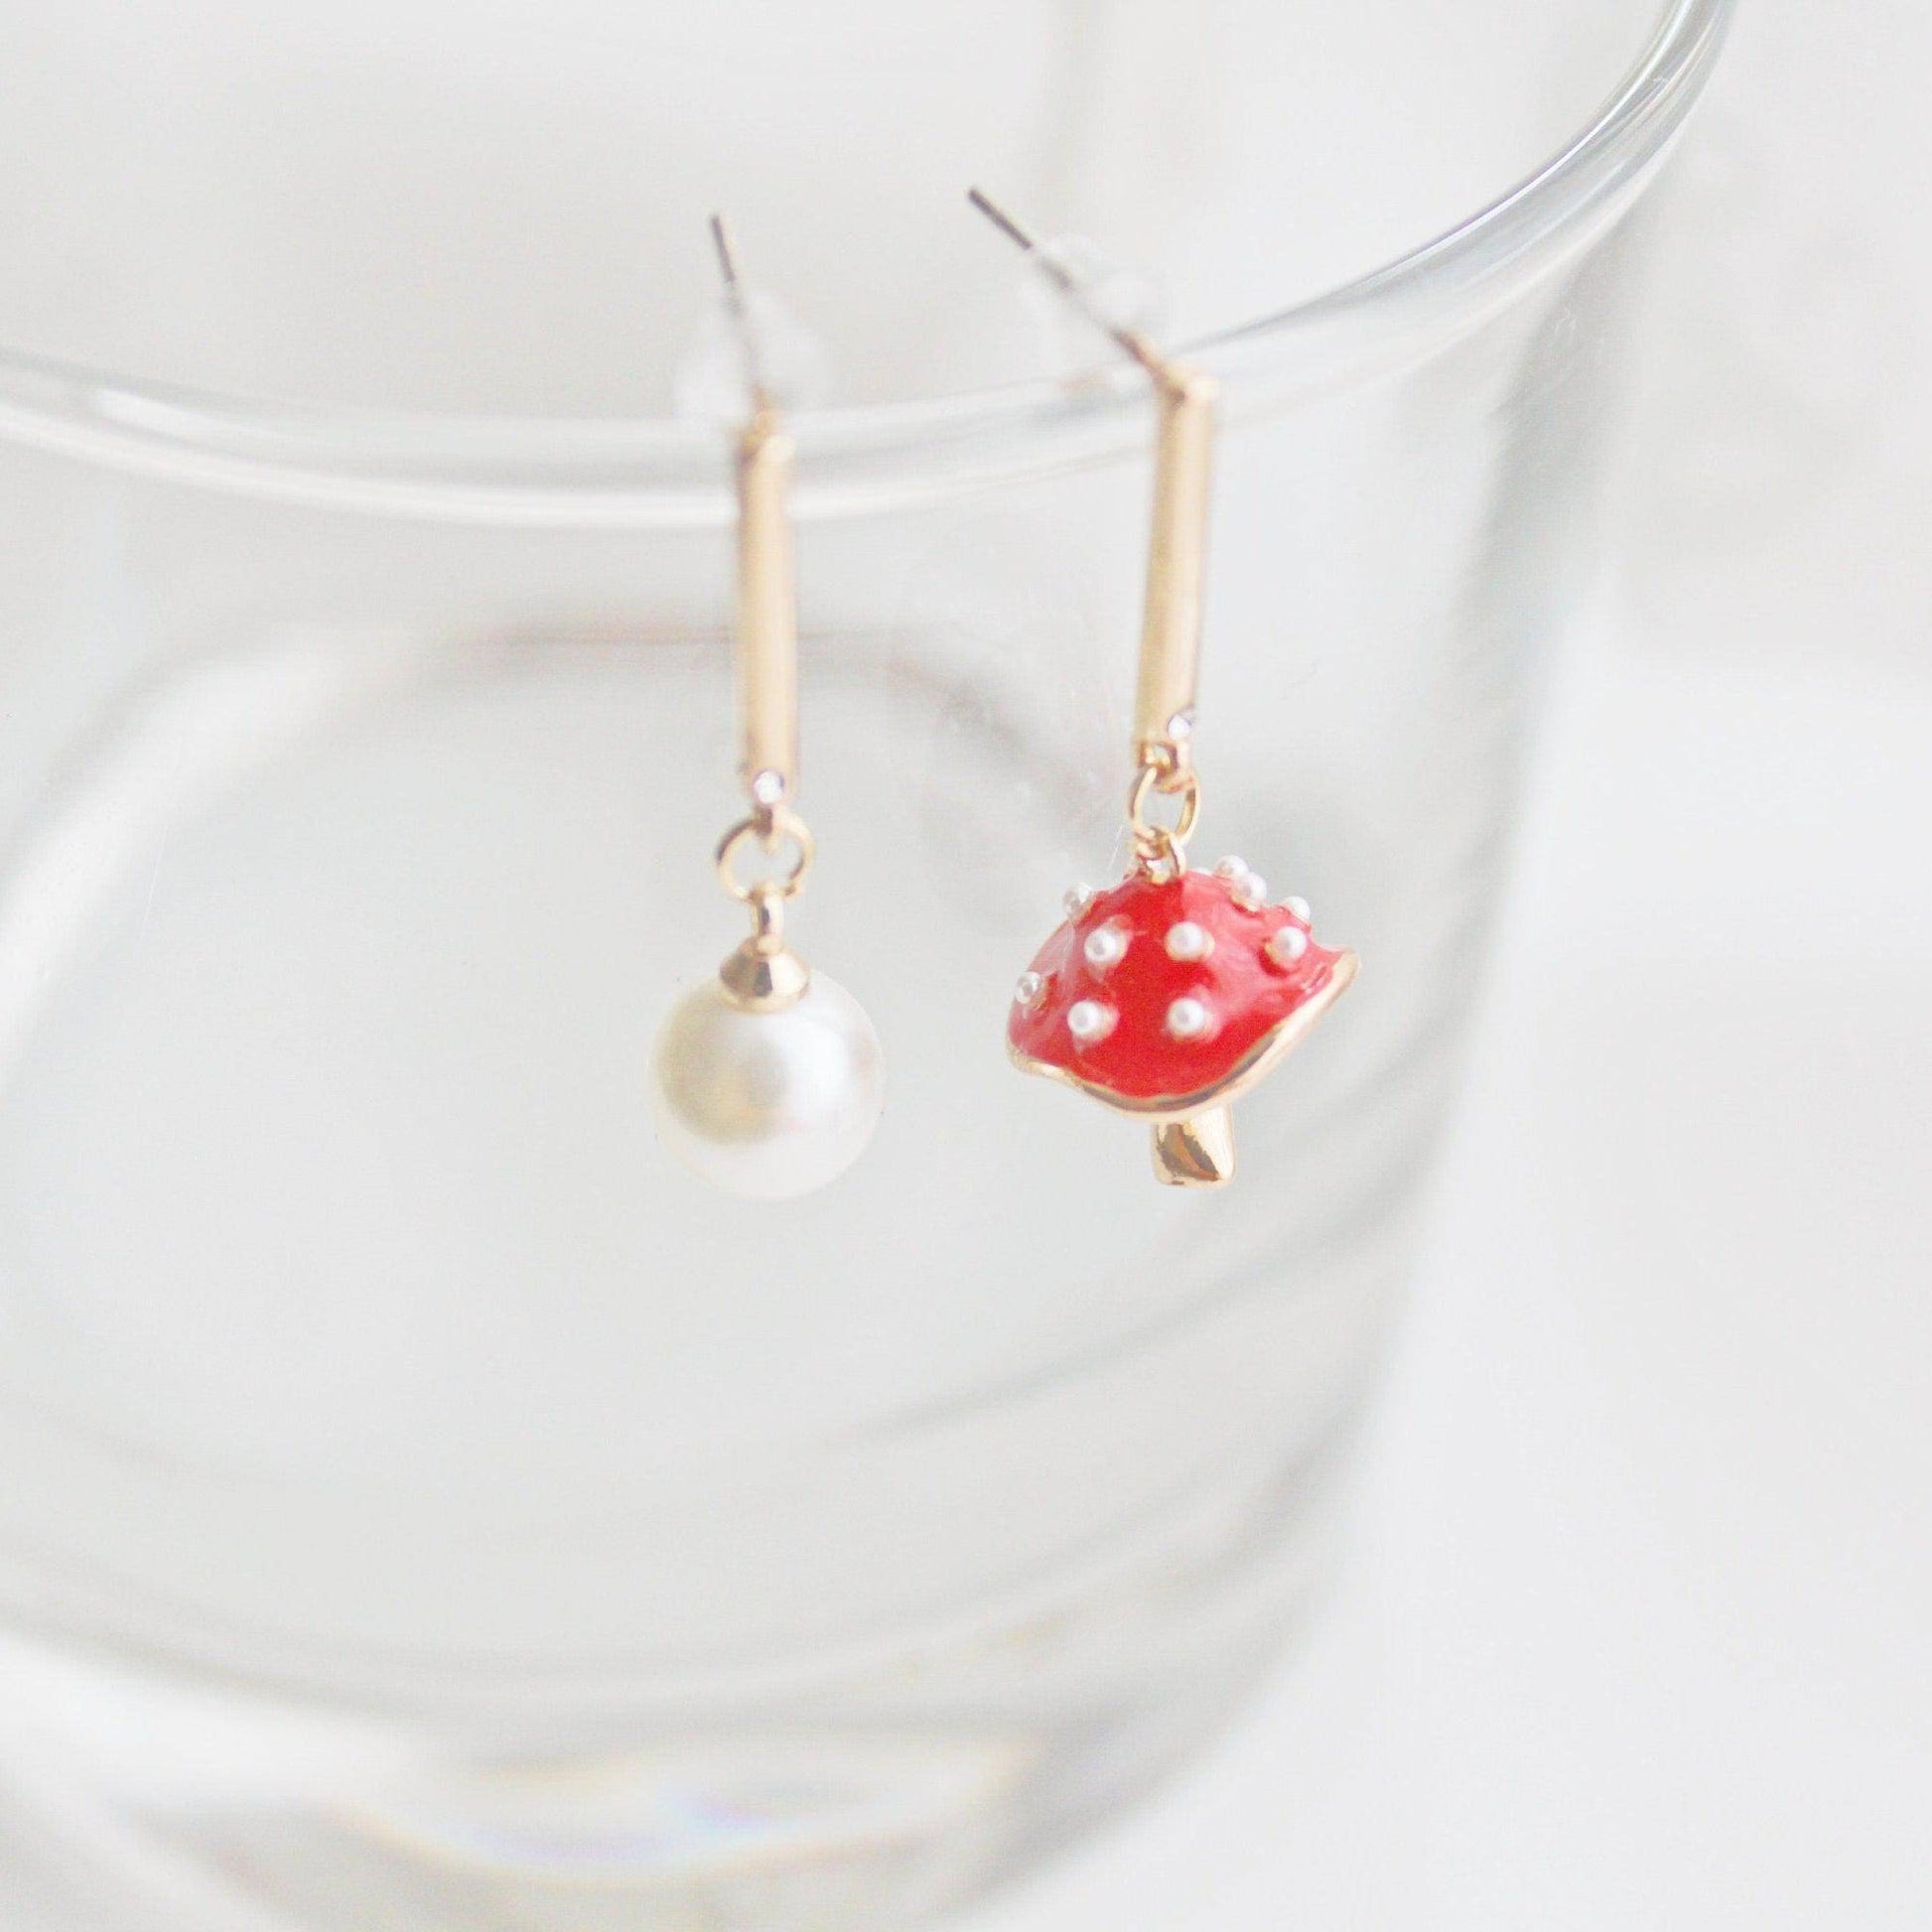 Red Mushroom Earrings - Fly Agaric and Pearl Drop Earrings-Ninaouity